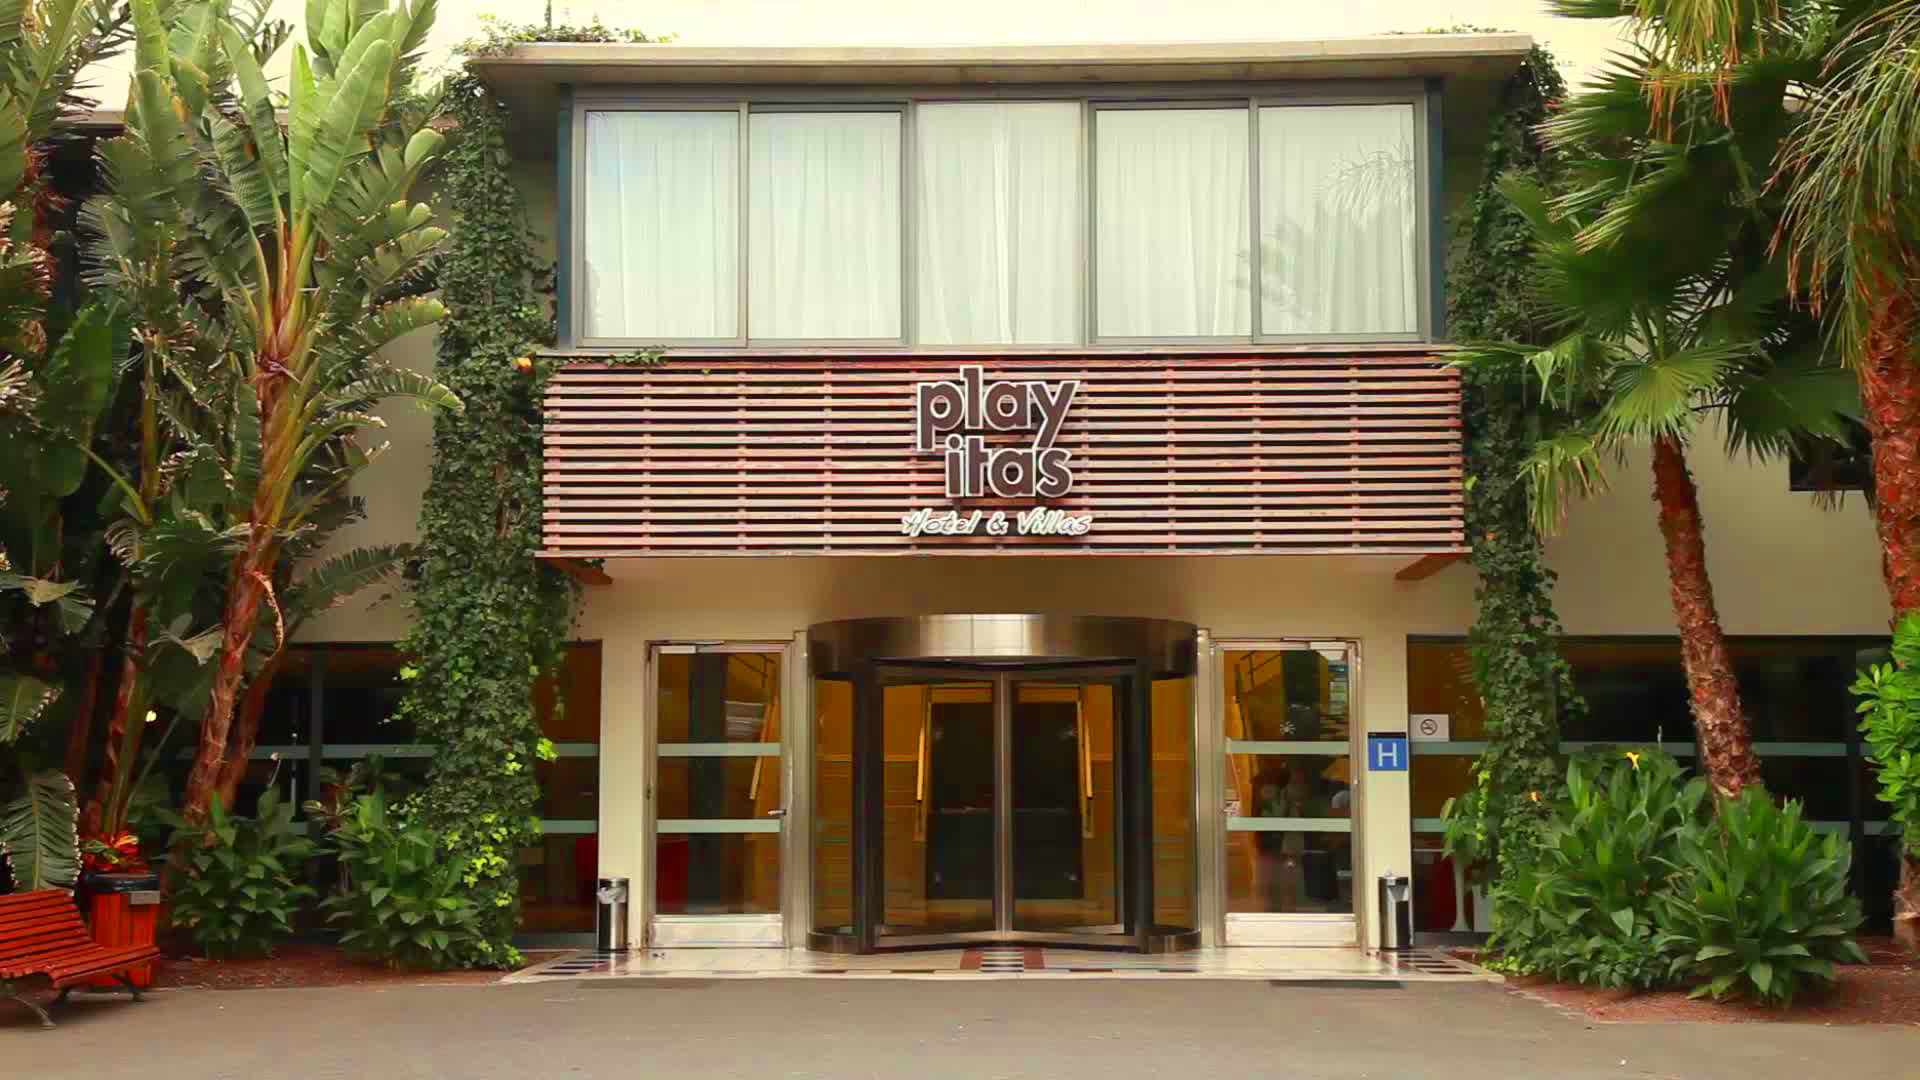 Playitas Hotel